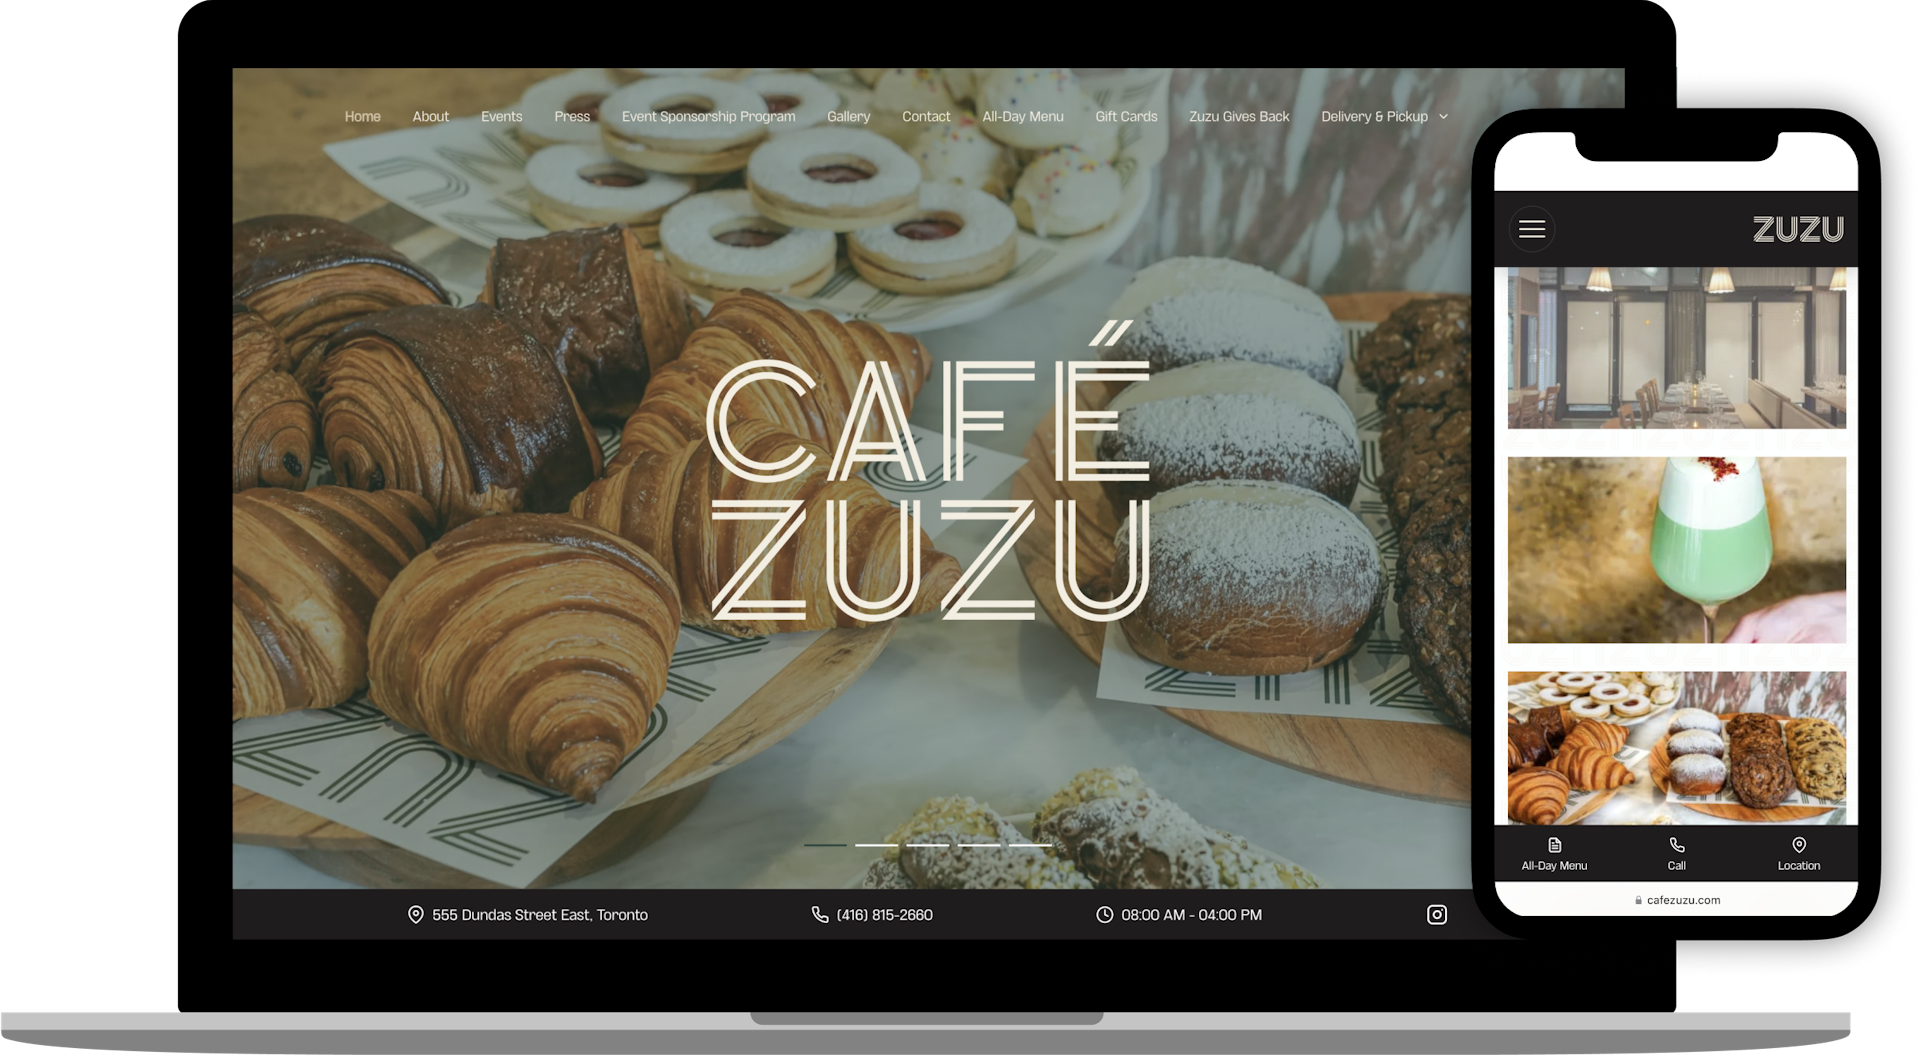 Cafe Zuzu Website